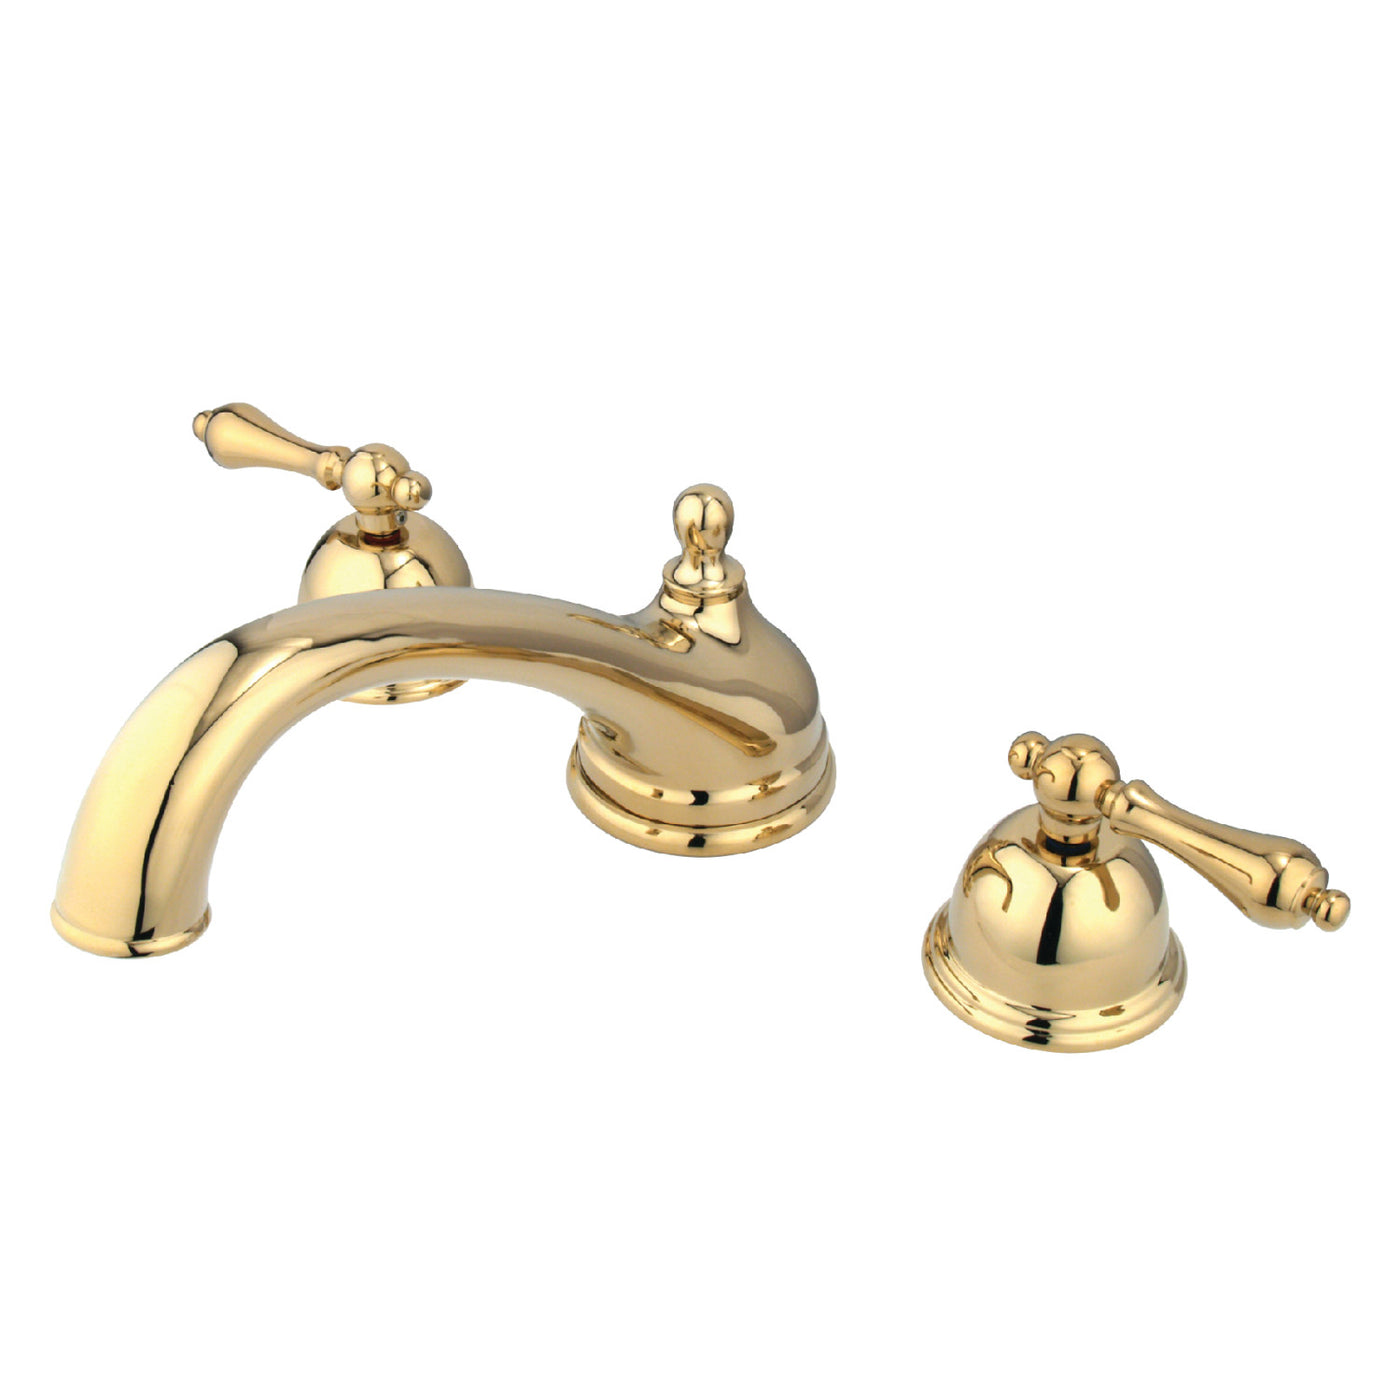 Elements of Design ES3352AL Roman Tub Faucet, Polished Brass